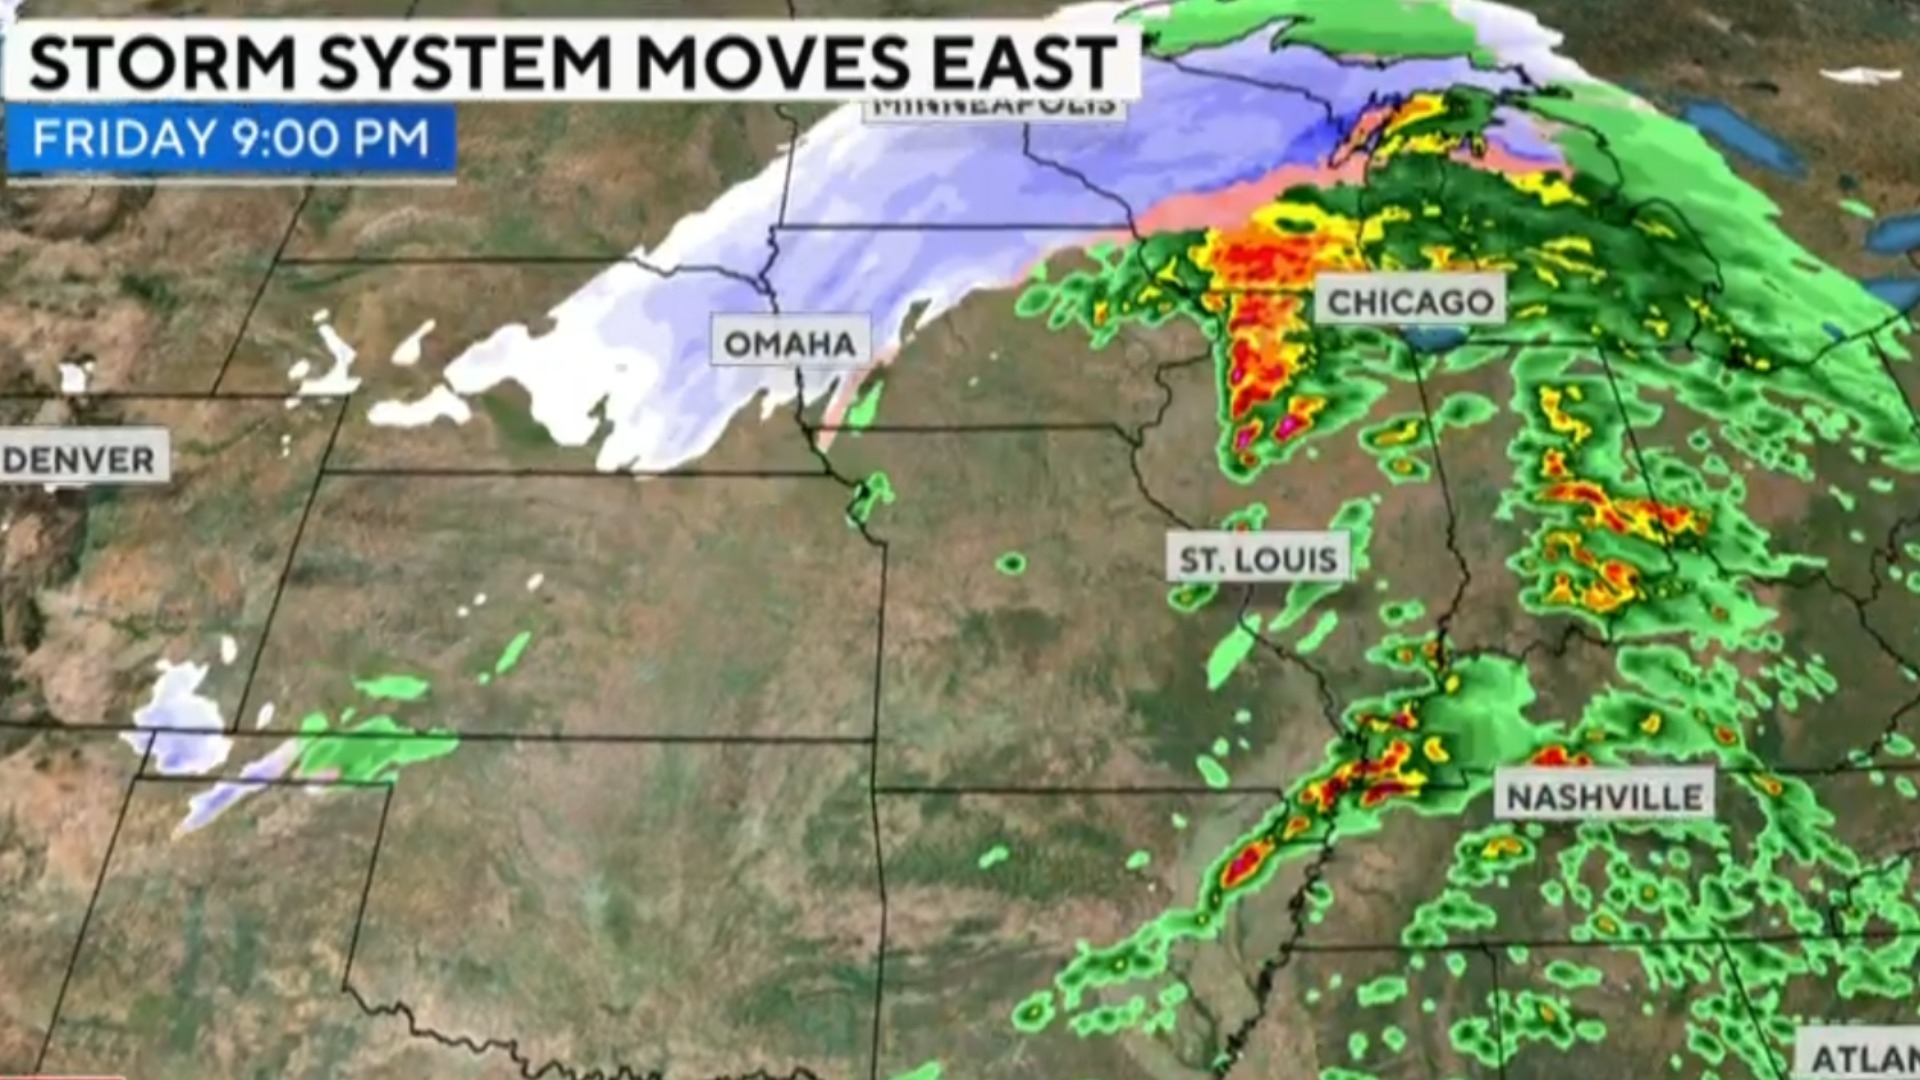 Watch CBS Evening News: Wild weather strikes central Full show on CBS